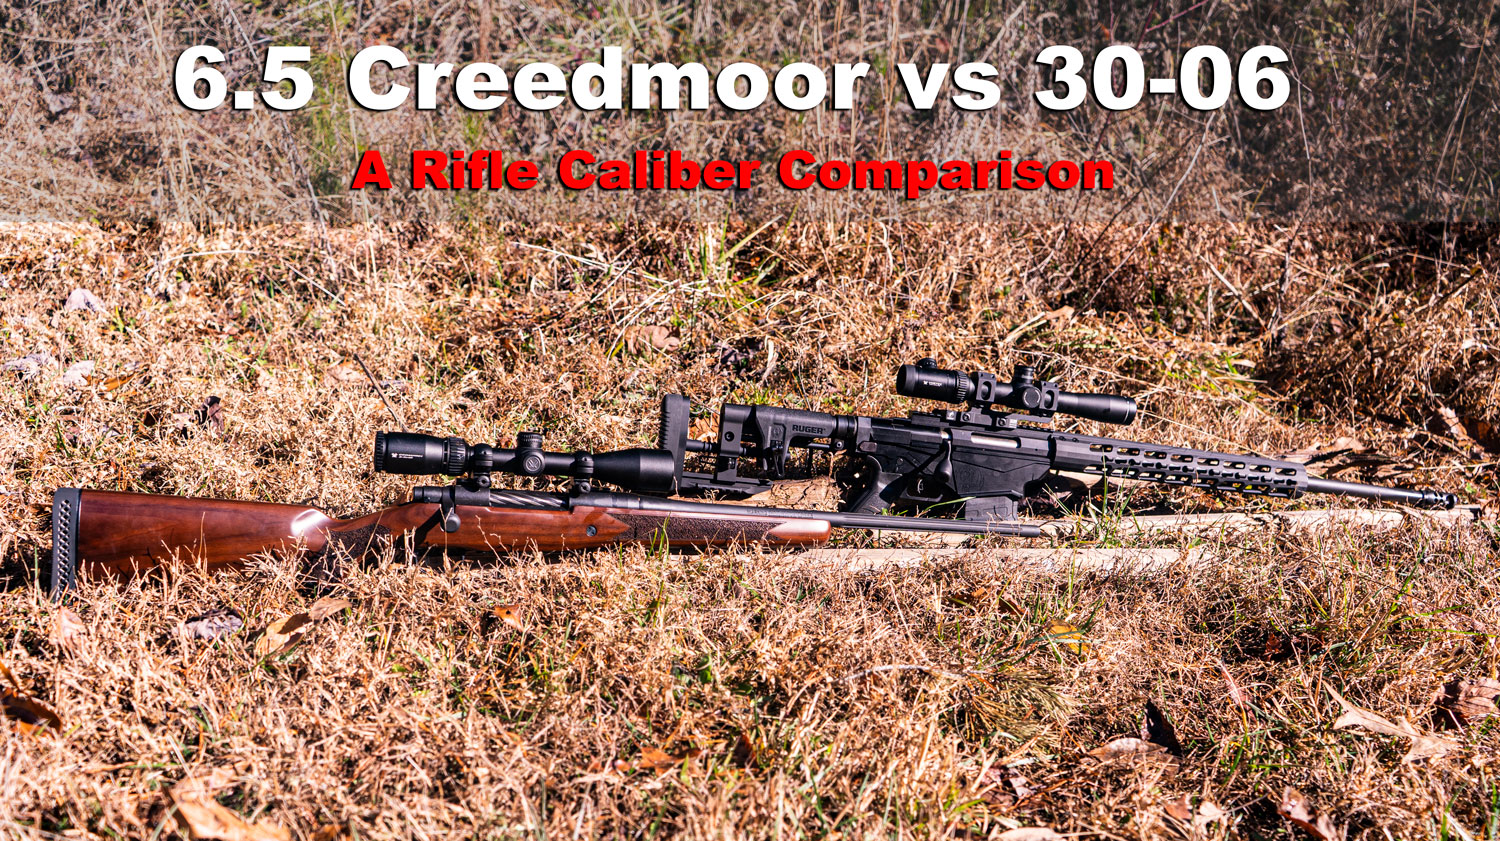 6.5 Creedmoor rifle vs .30-06 springfield rifle